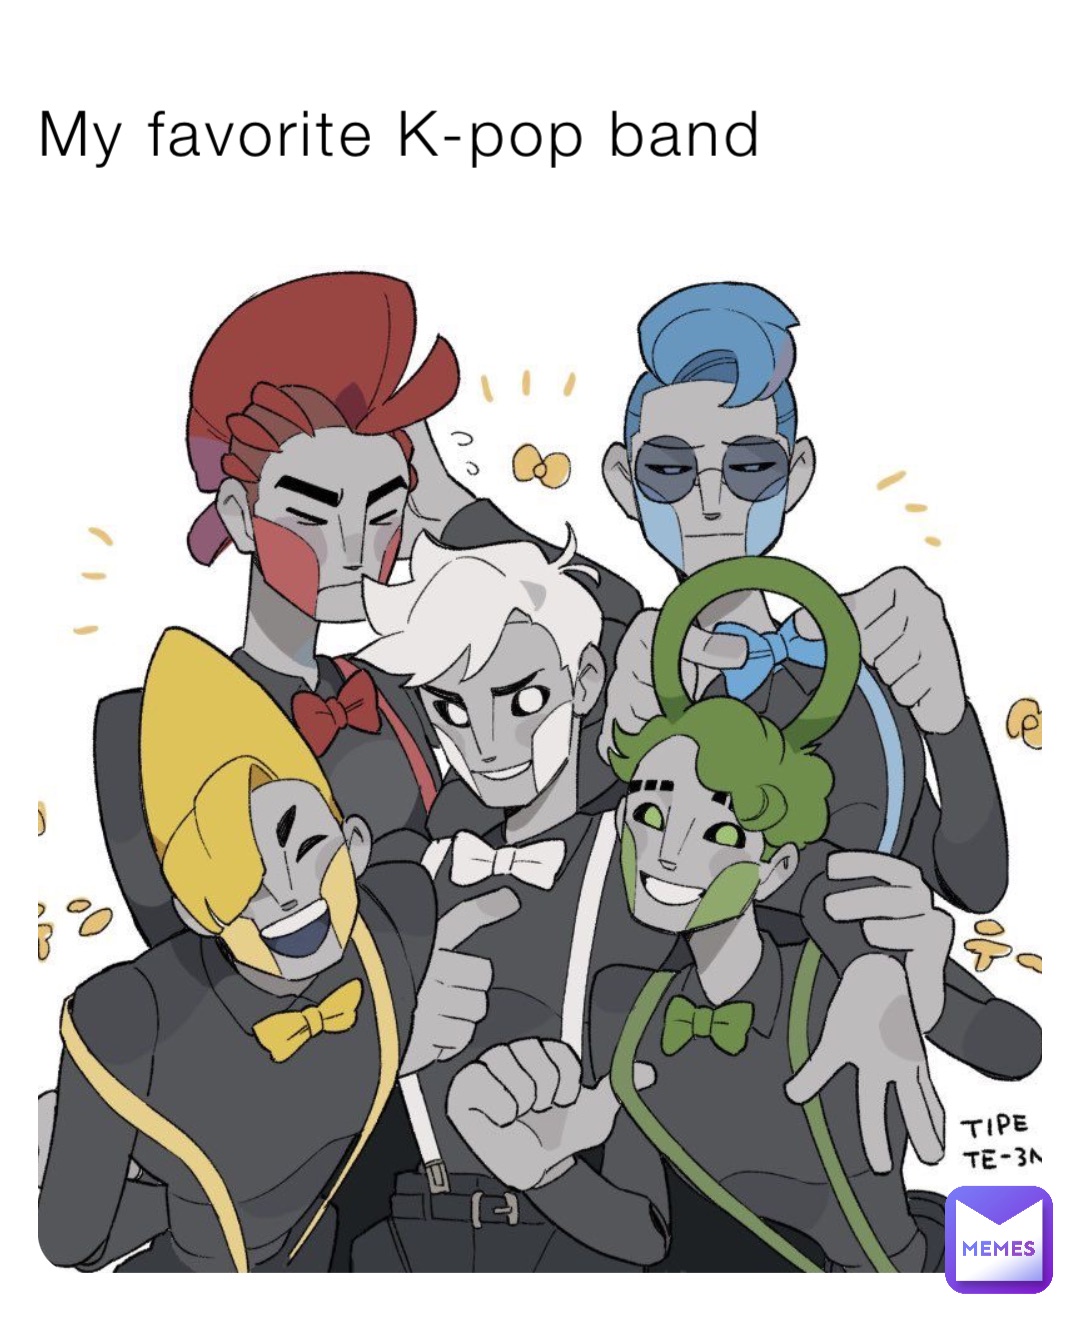 My favorite K-pop band